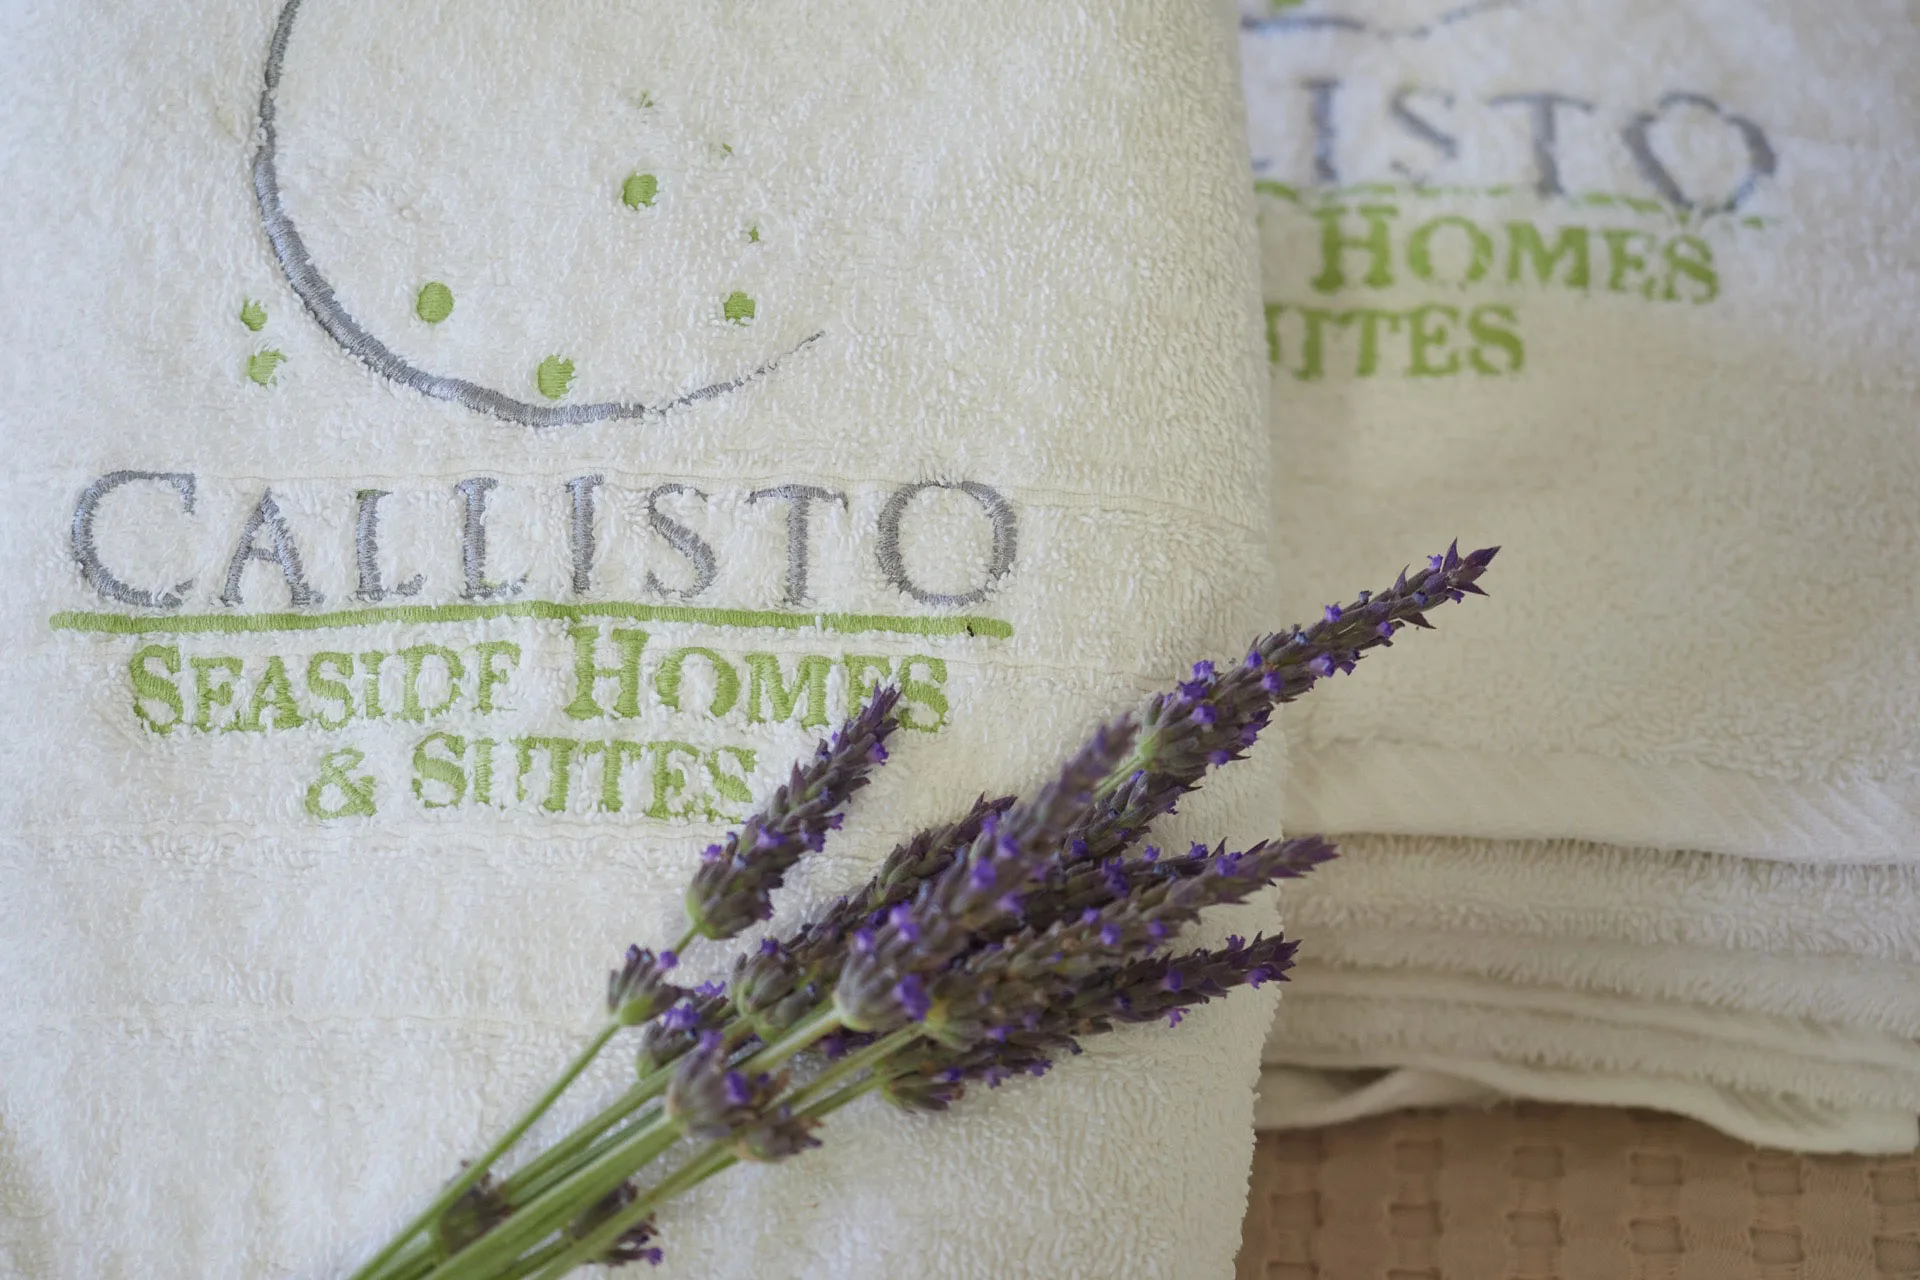 Callisto Homes & Suites